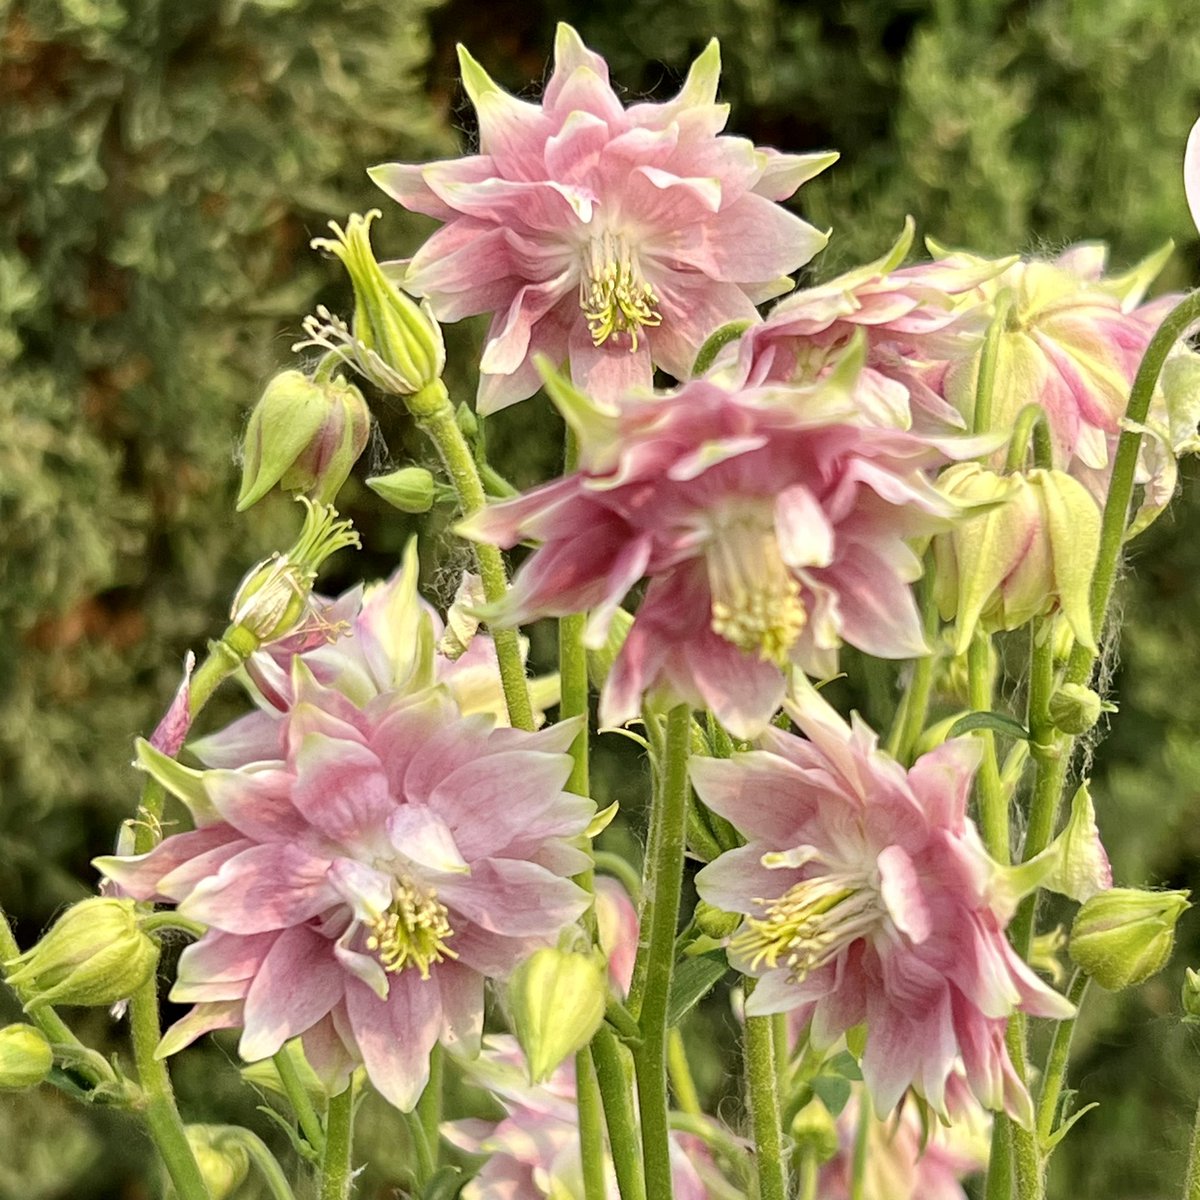 #FlowersonFriday #PinkFriday 
Aquilegia ‘Nora Barlow’ is still the Belle of my June garden 🩷🌸🩷